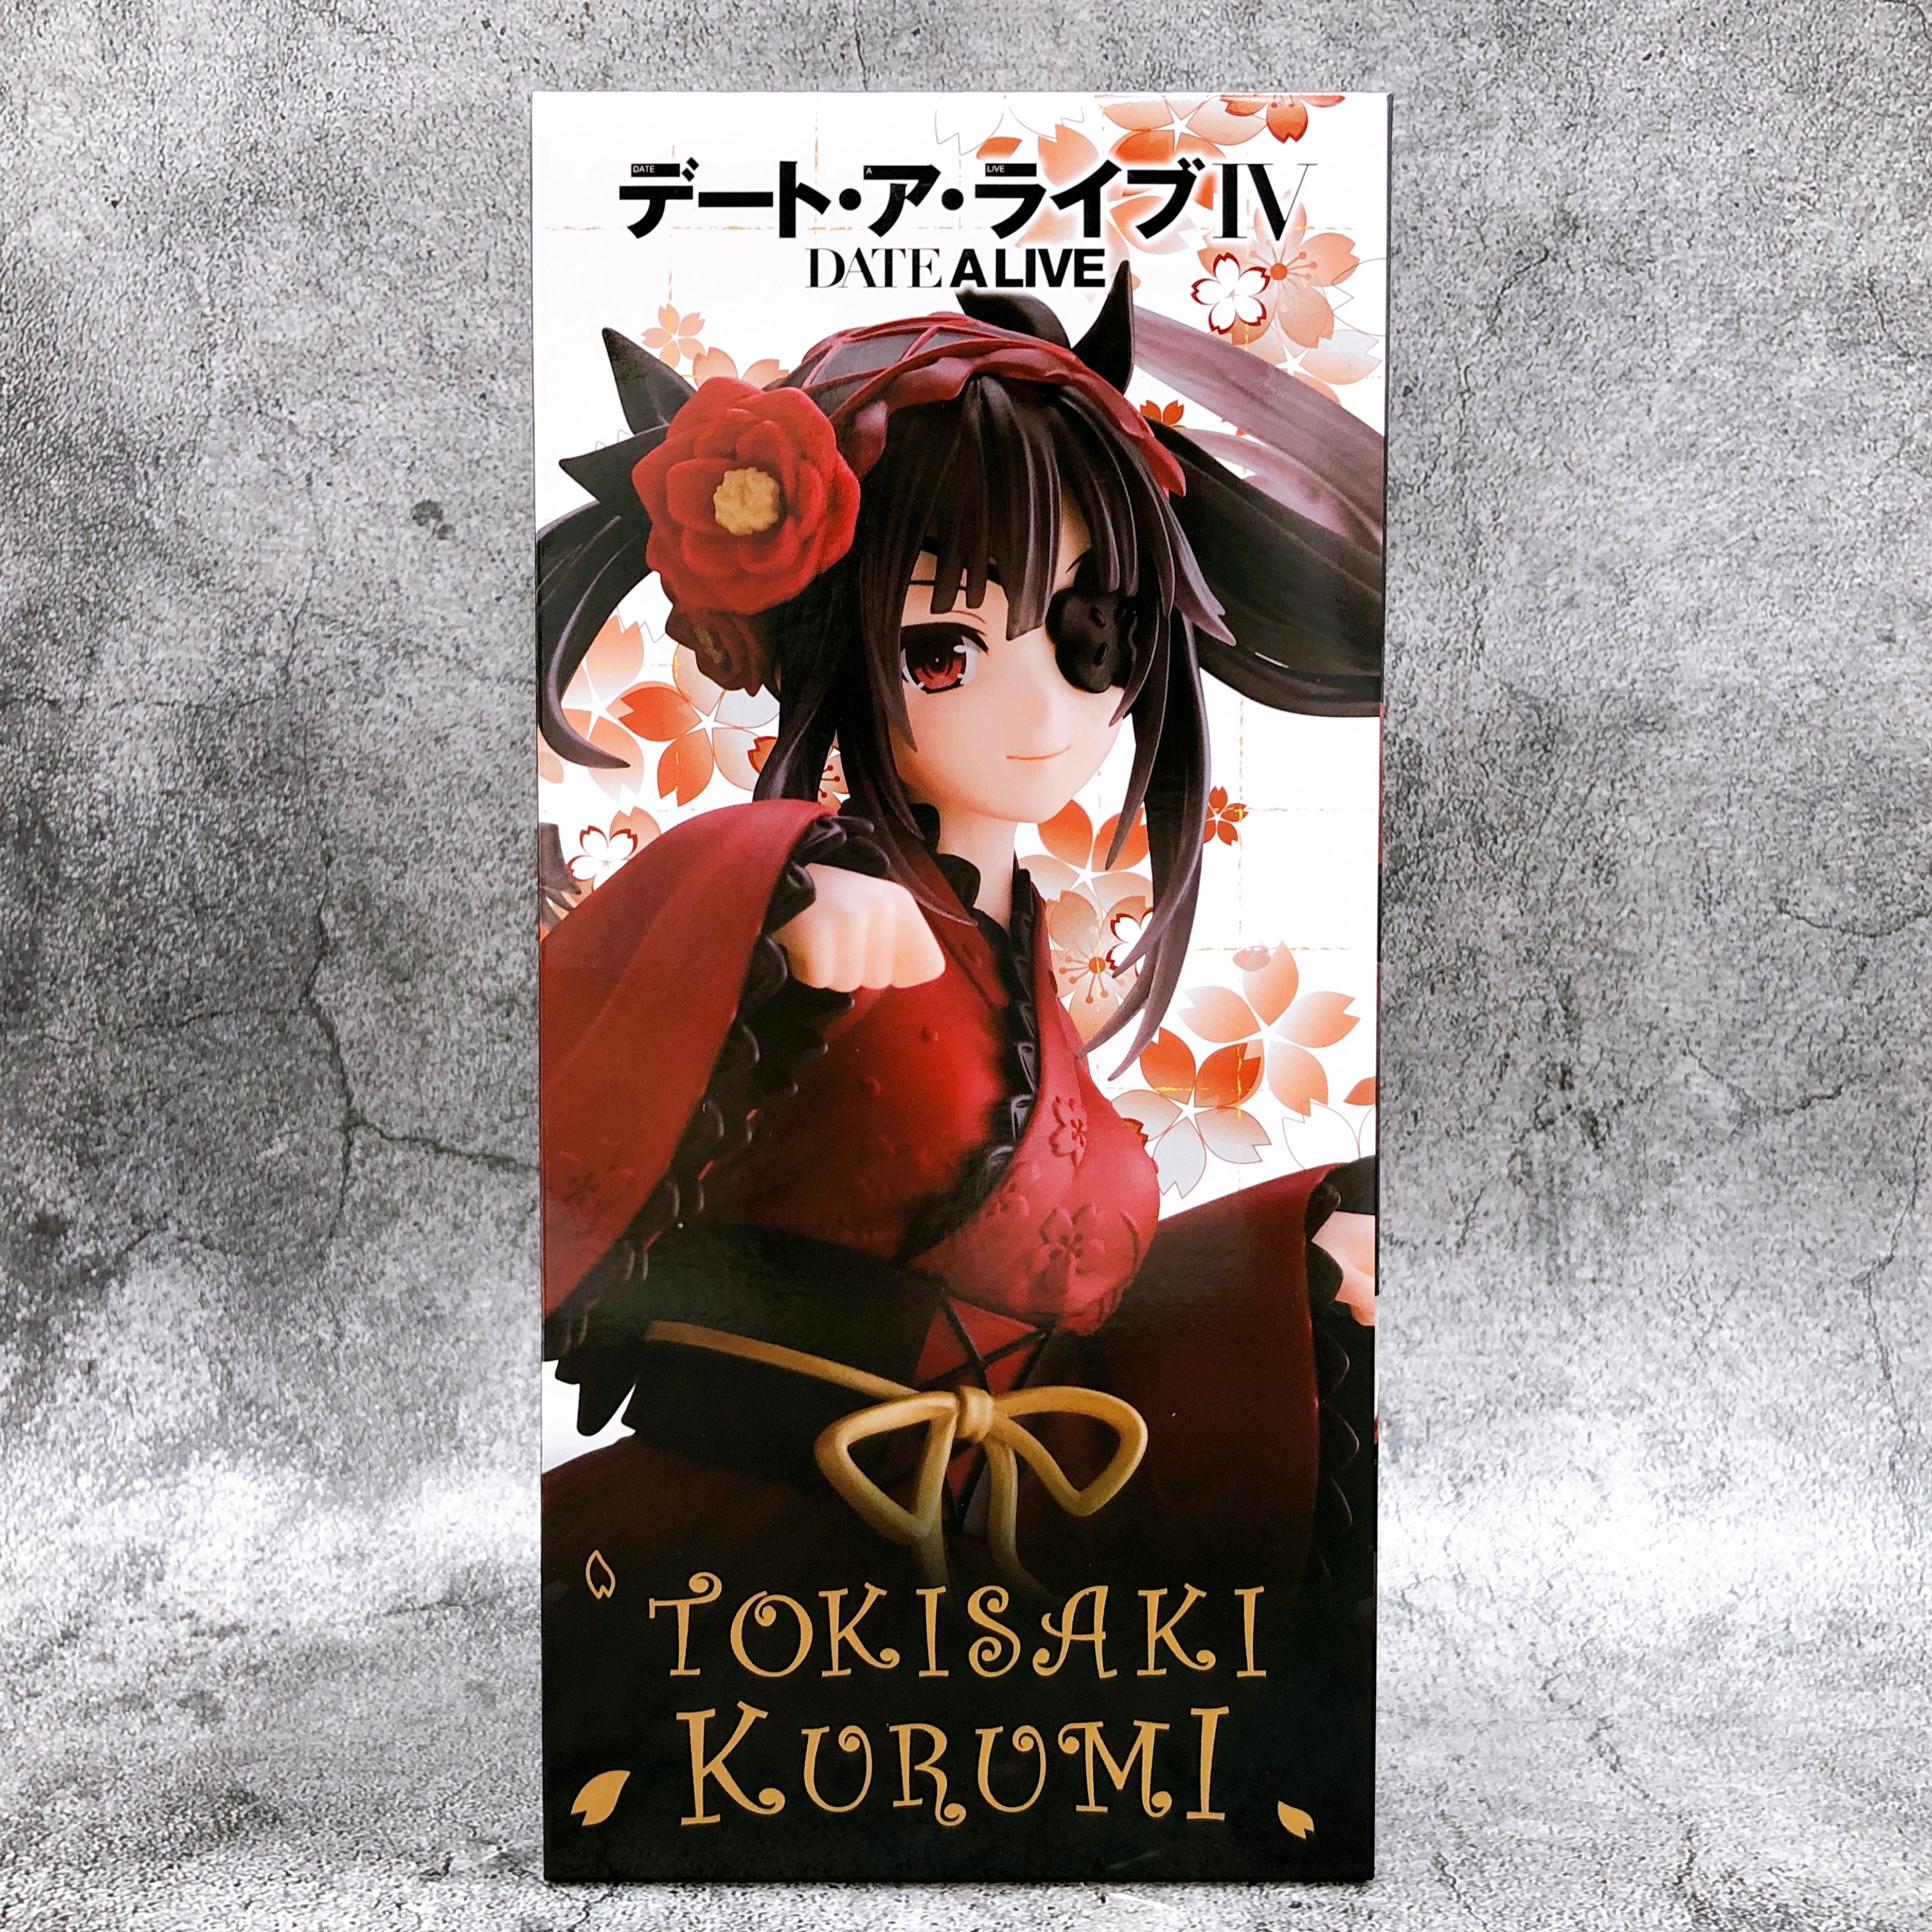 Kurumi Tokisaki - Date A Live IV Clock for Sale by Arwain